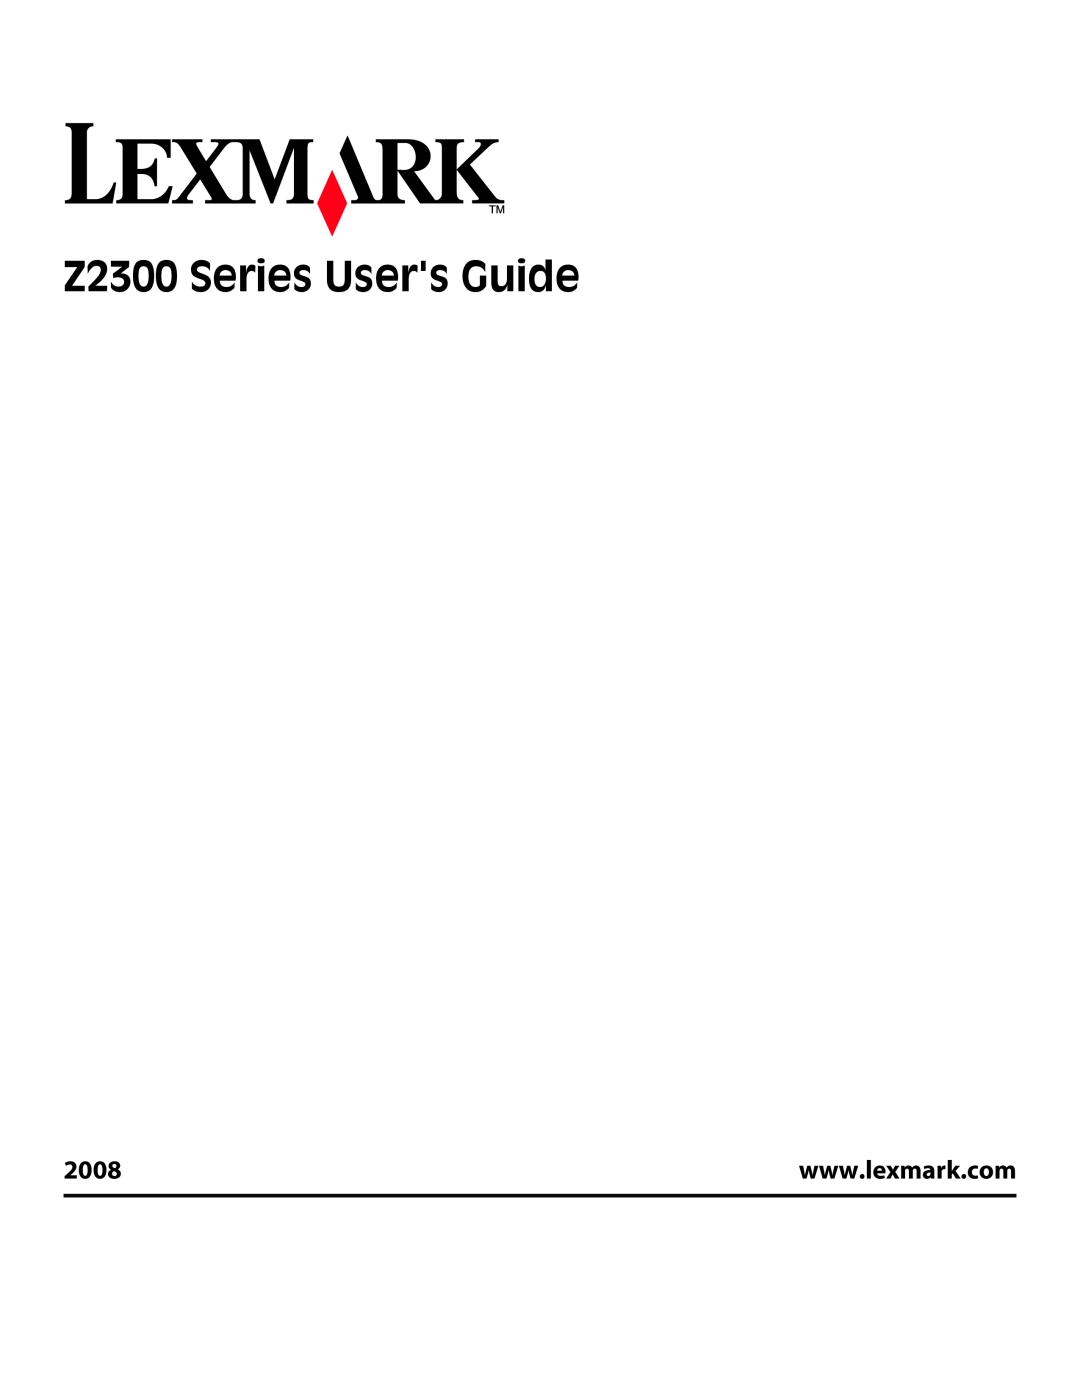 Lexmark manual Z2300 Series Users Guide, 2008 